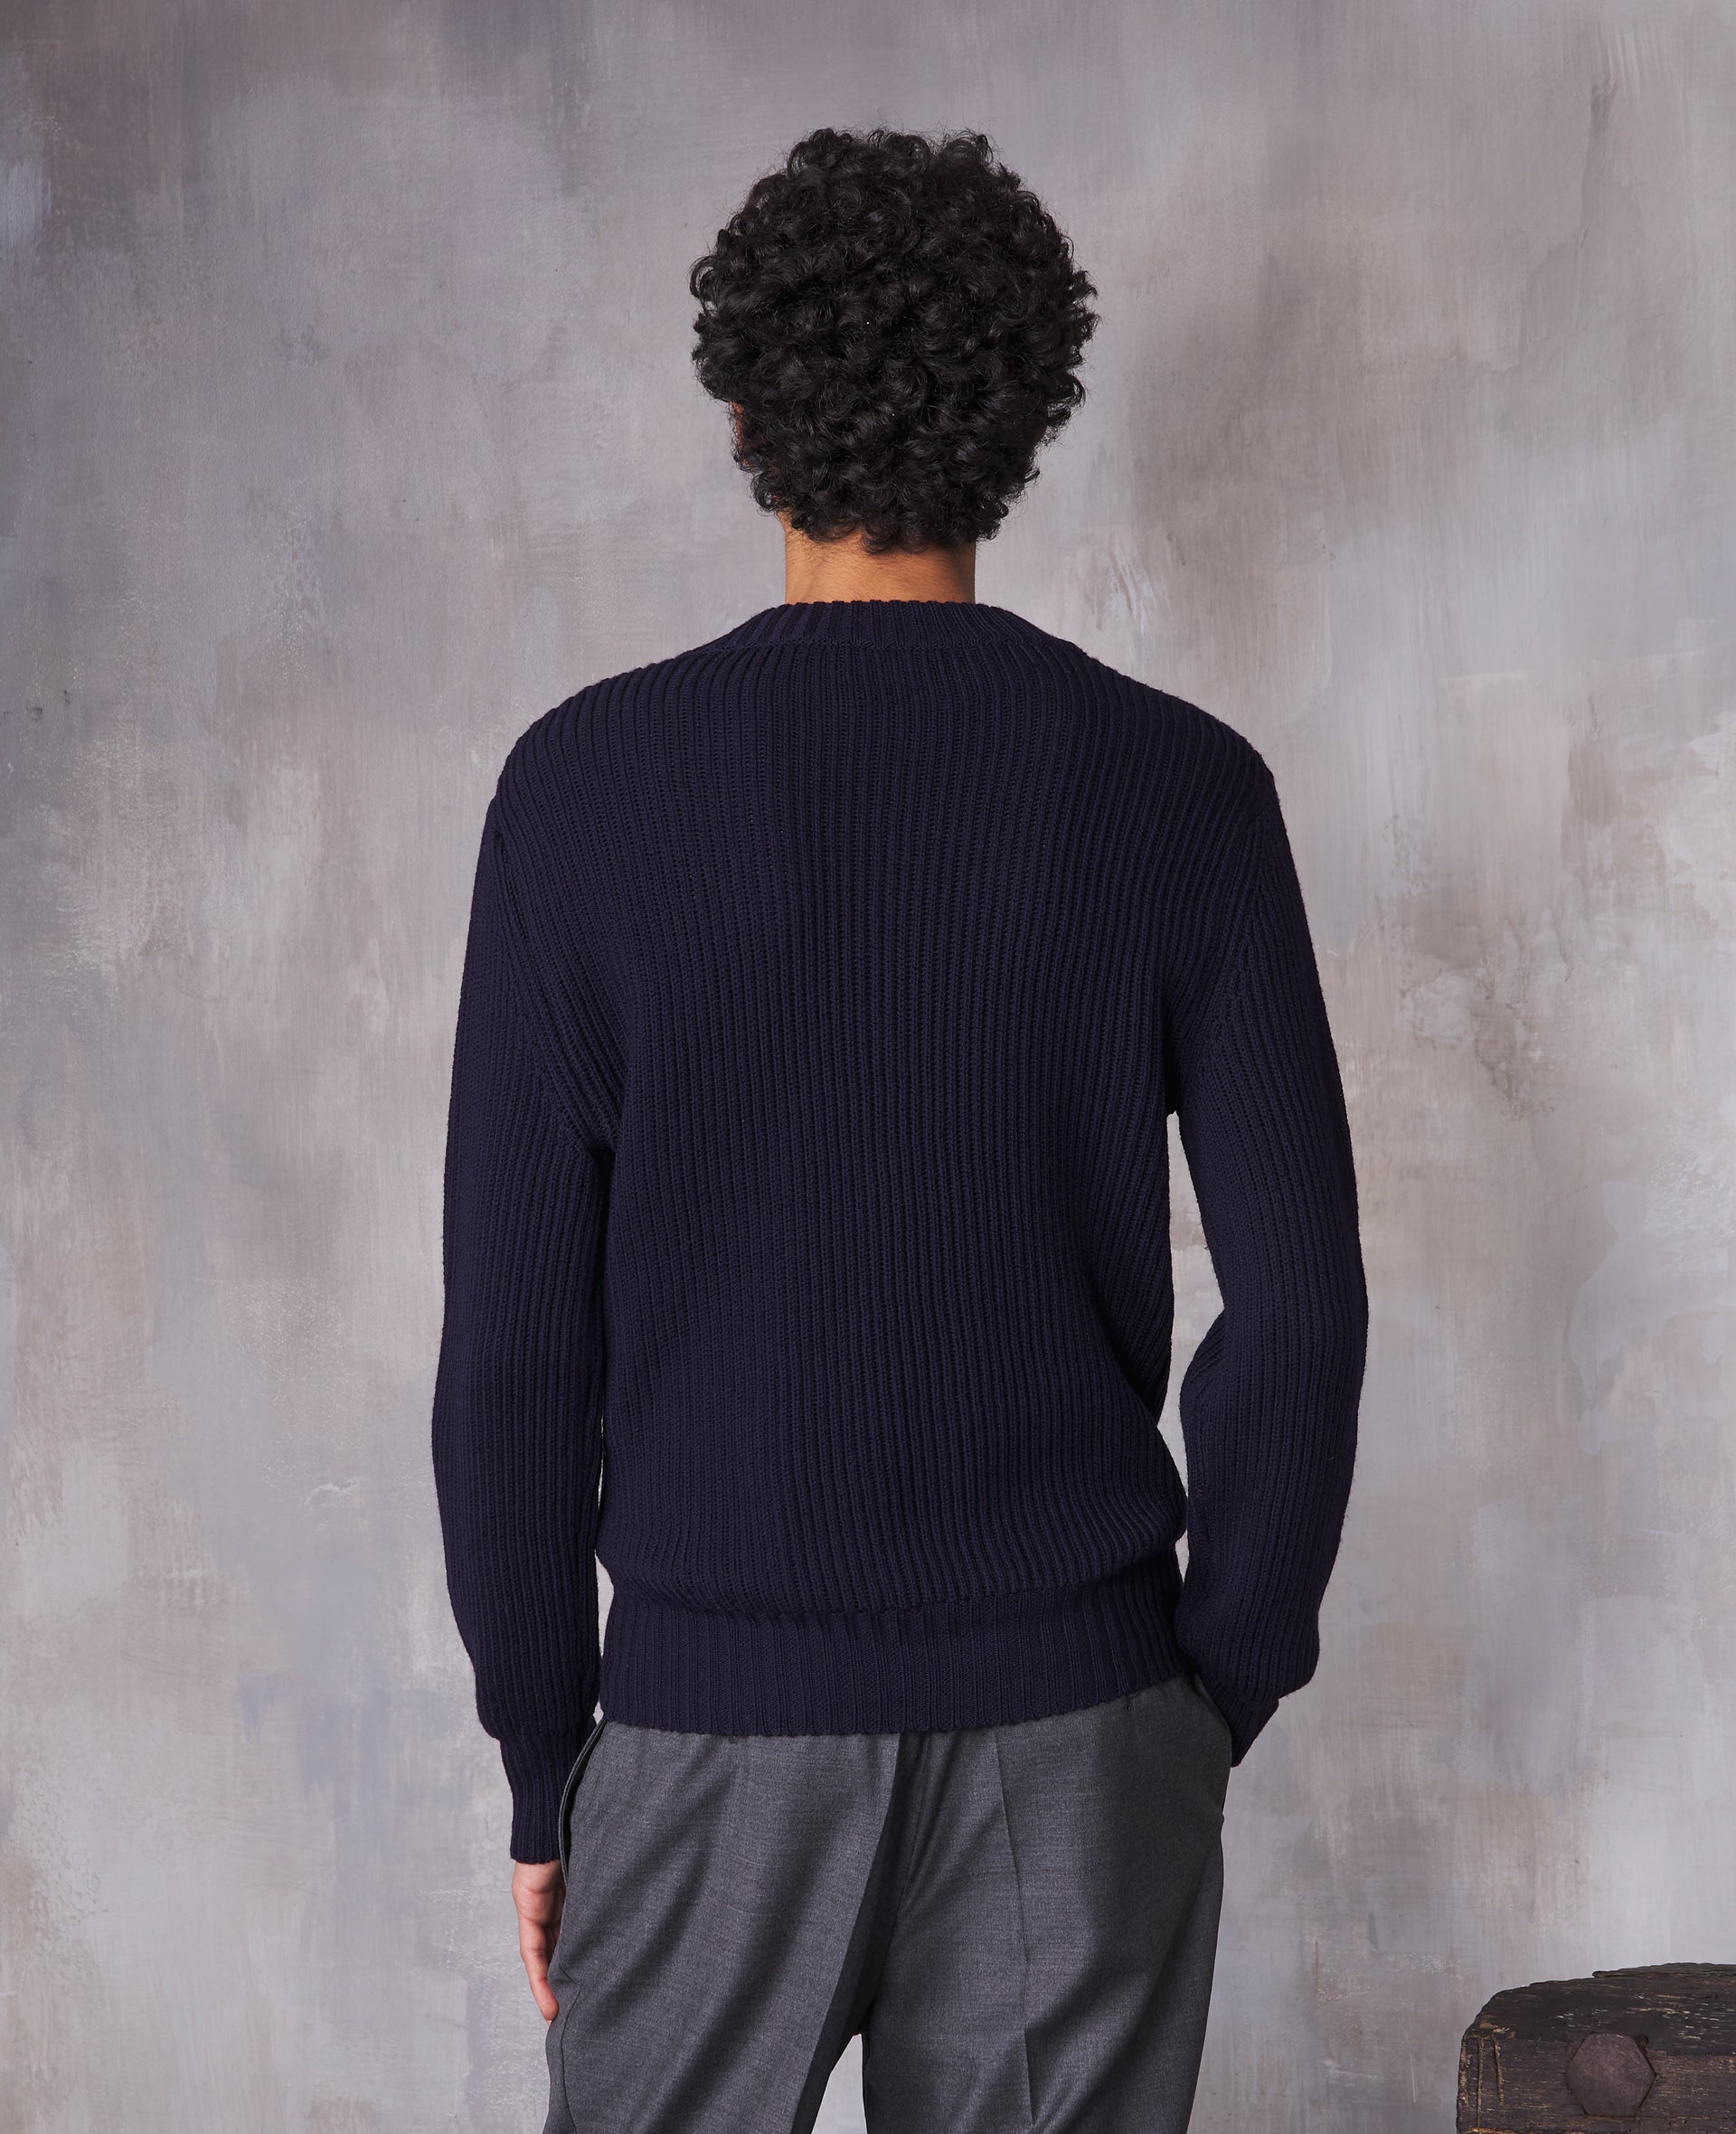 Francis sweater - Image 3